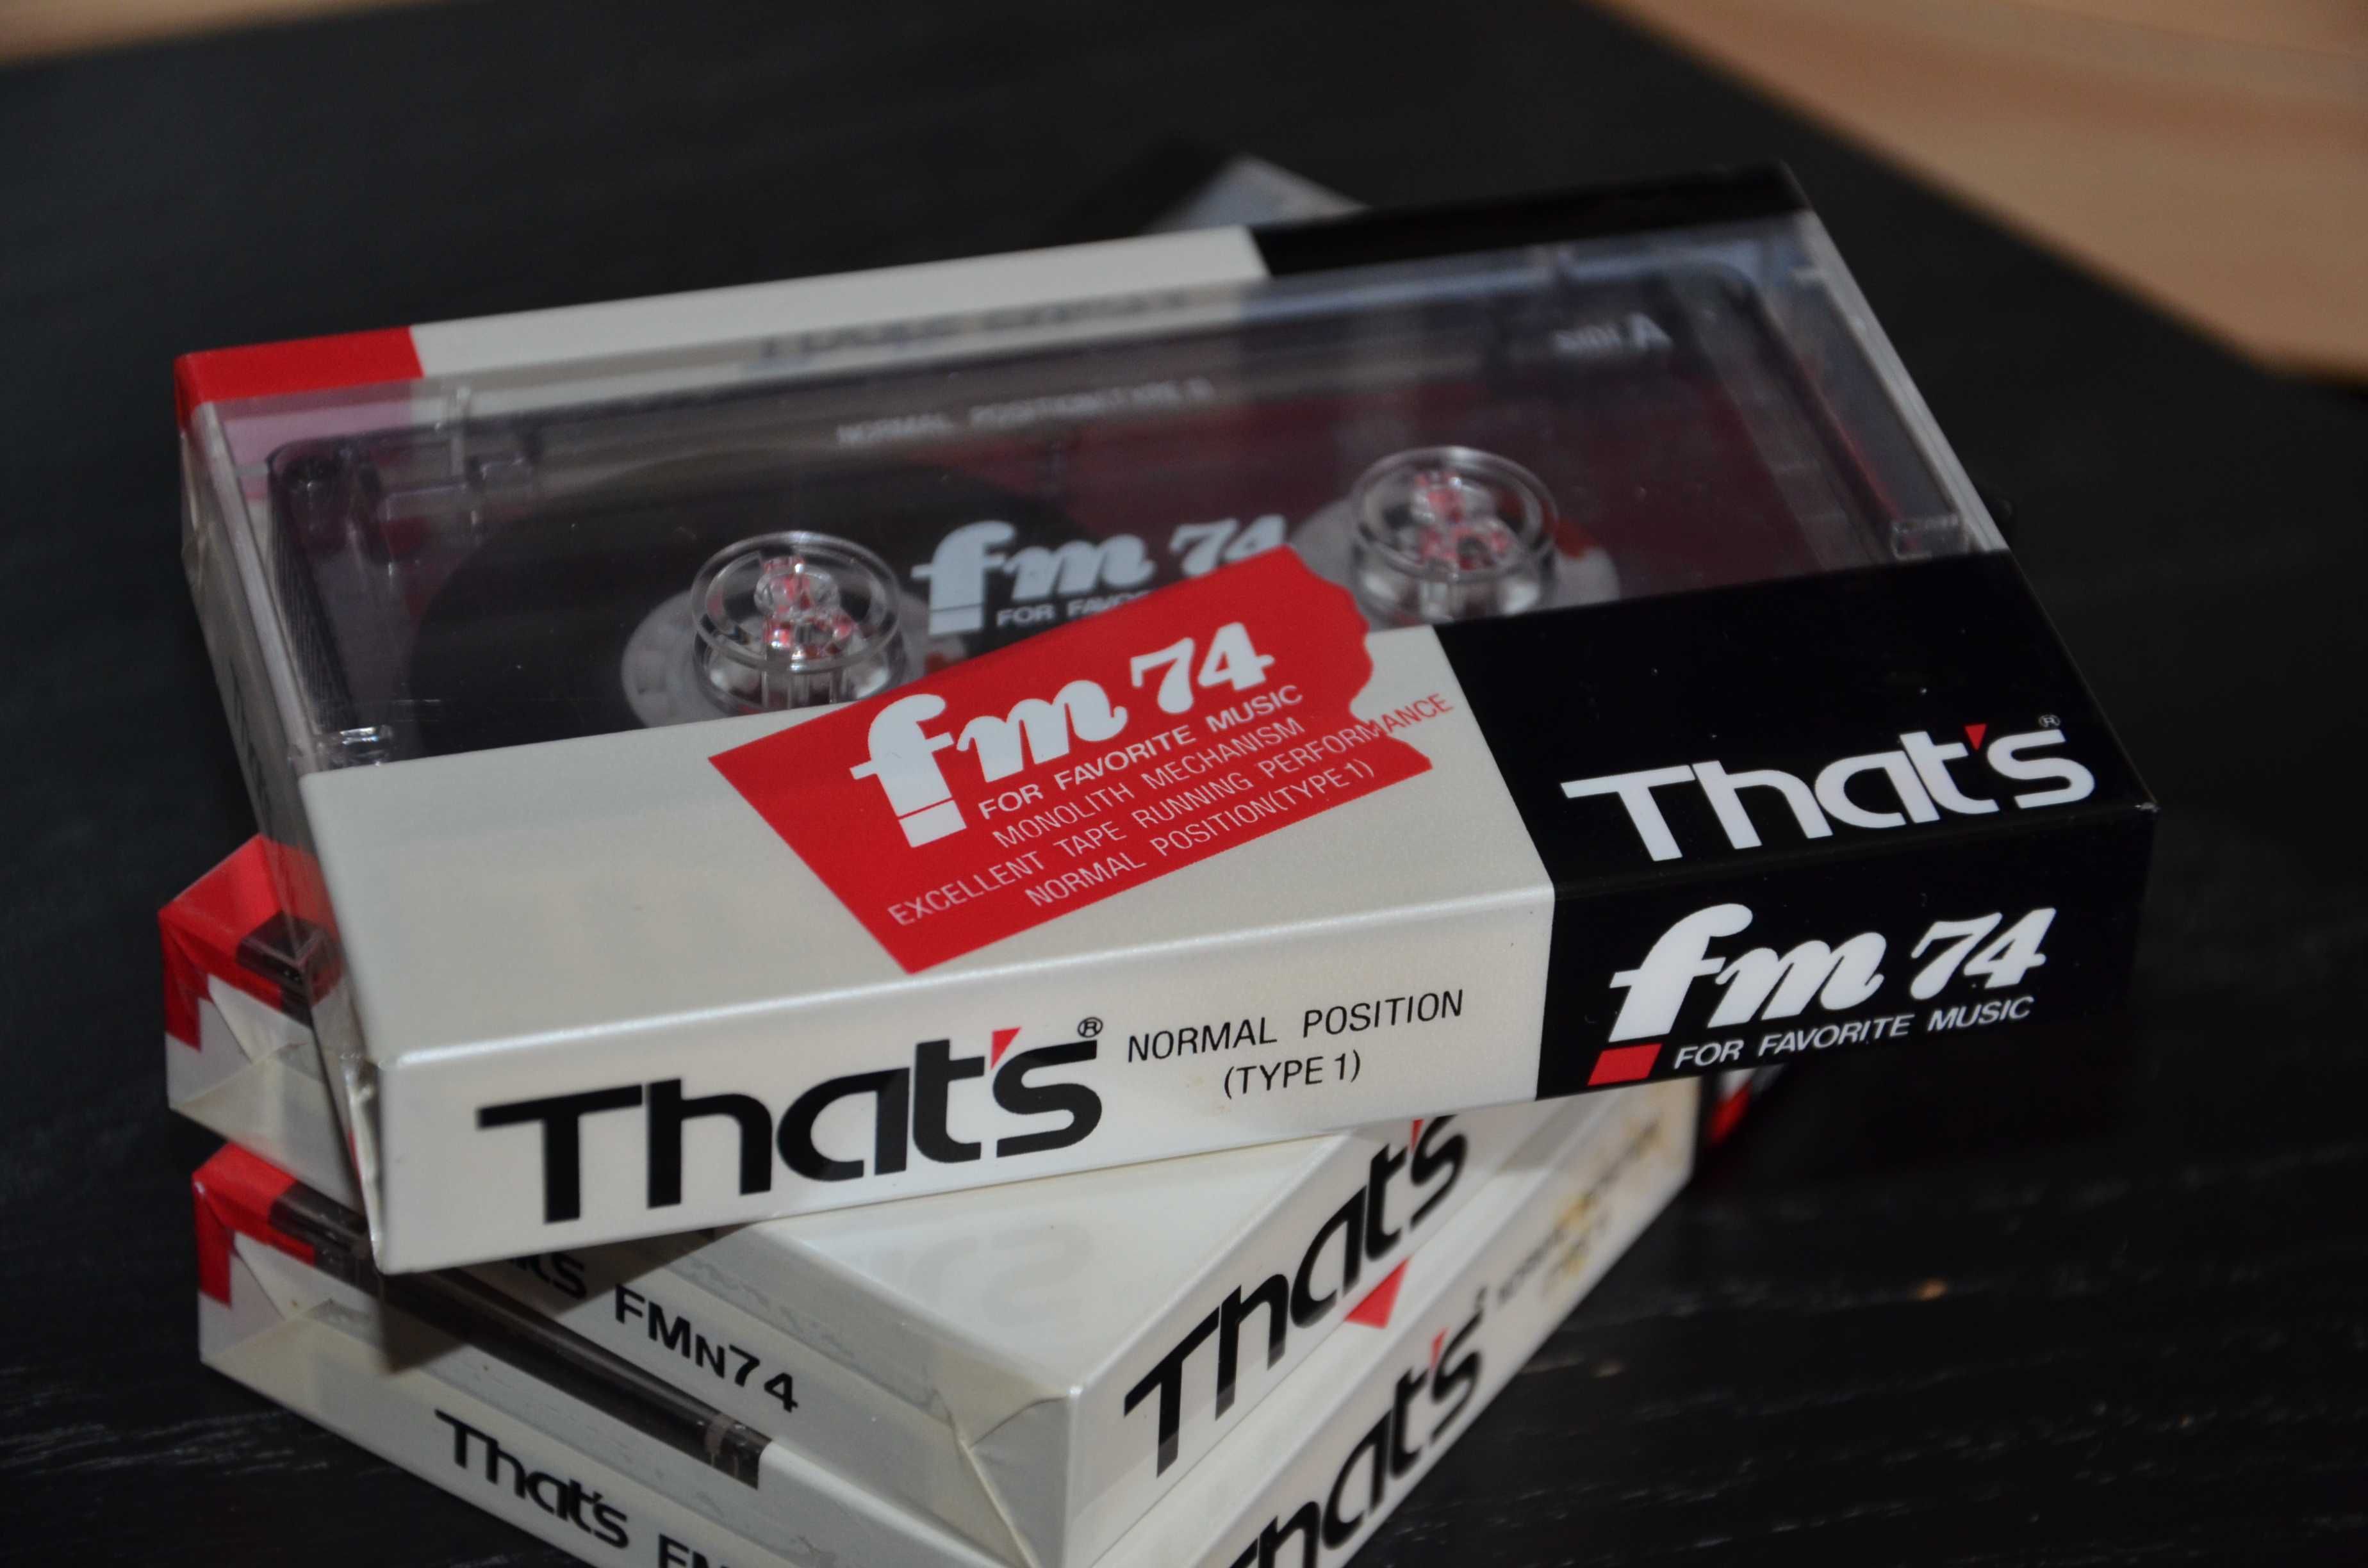 Раритетная коллекционная аудиокассета THAT'S FM 74 Made in Japan 1990